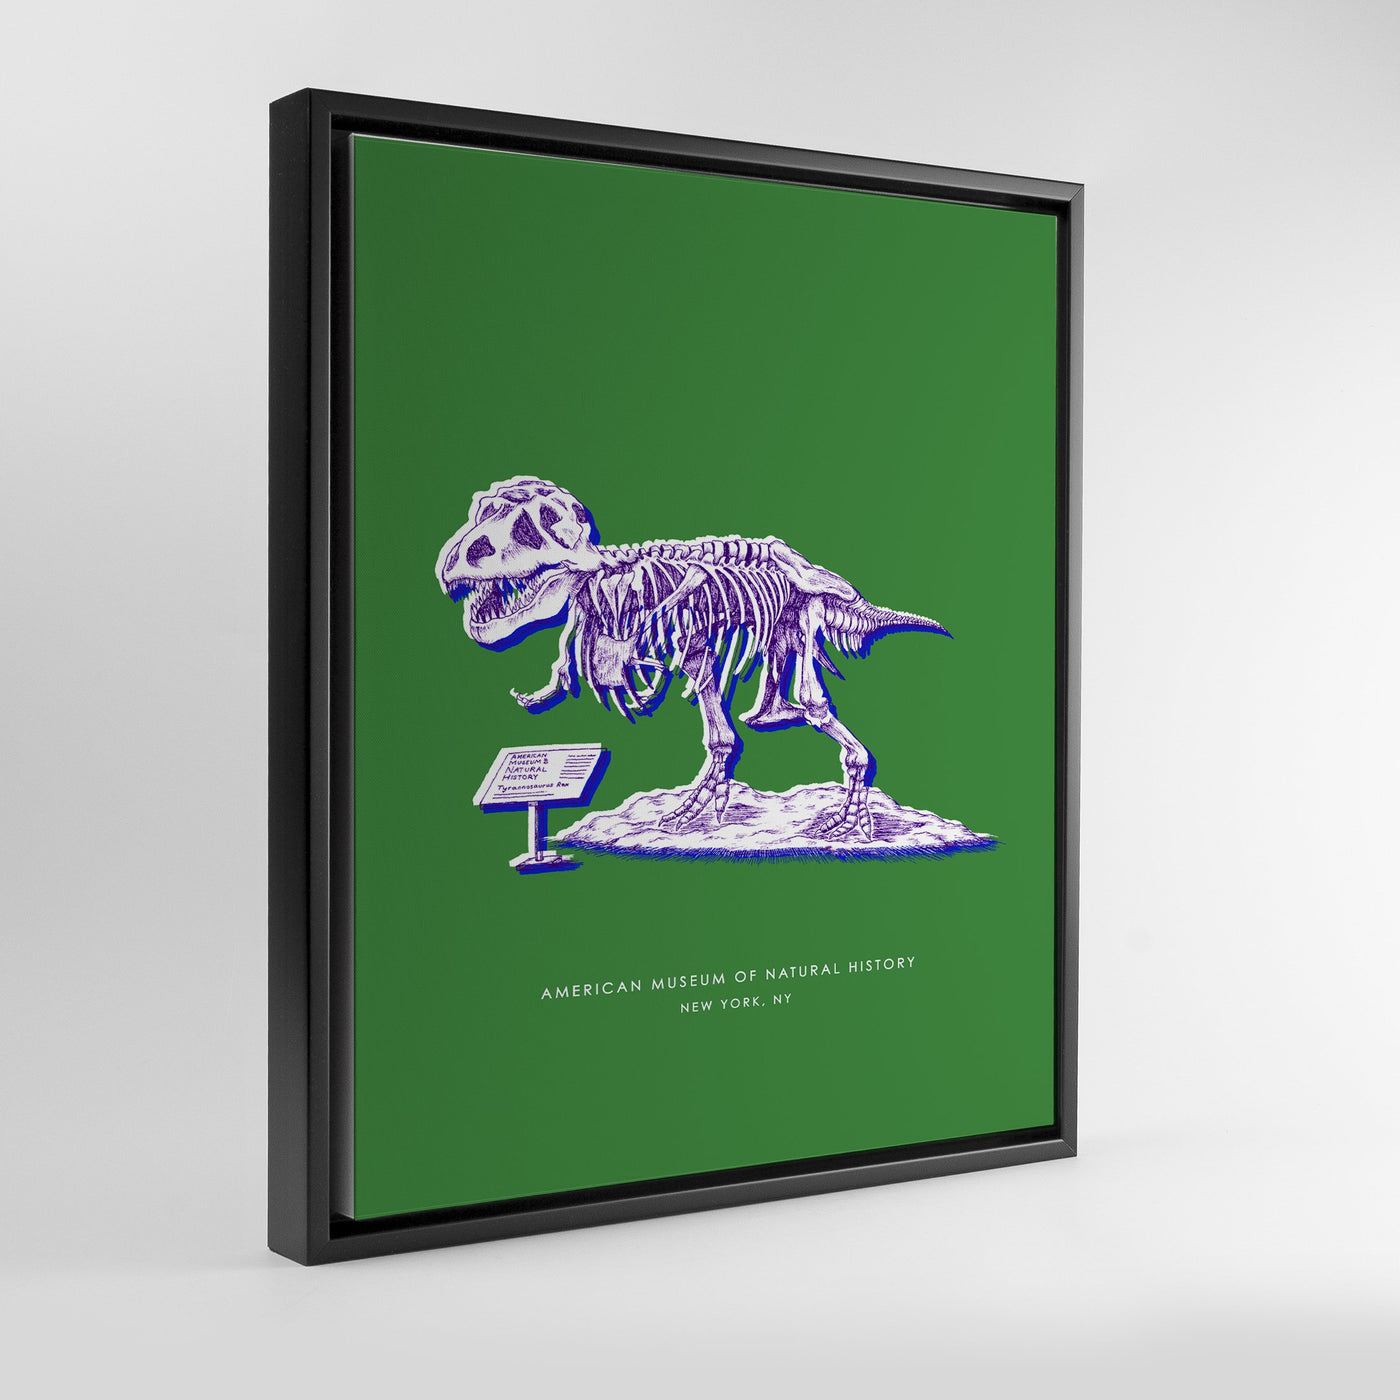 Gallery Prints Green Canvas / 8x10 / Black Frame New York Dinosaur Print dombezalergii